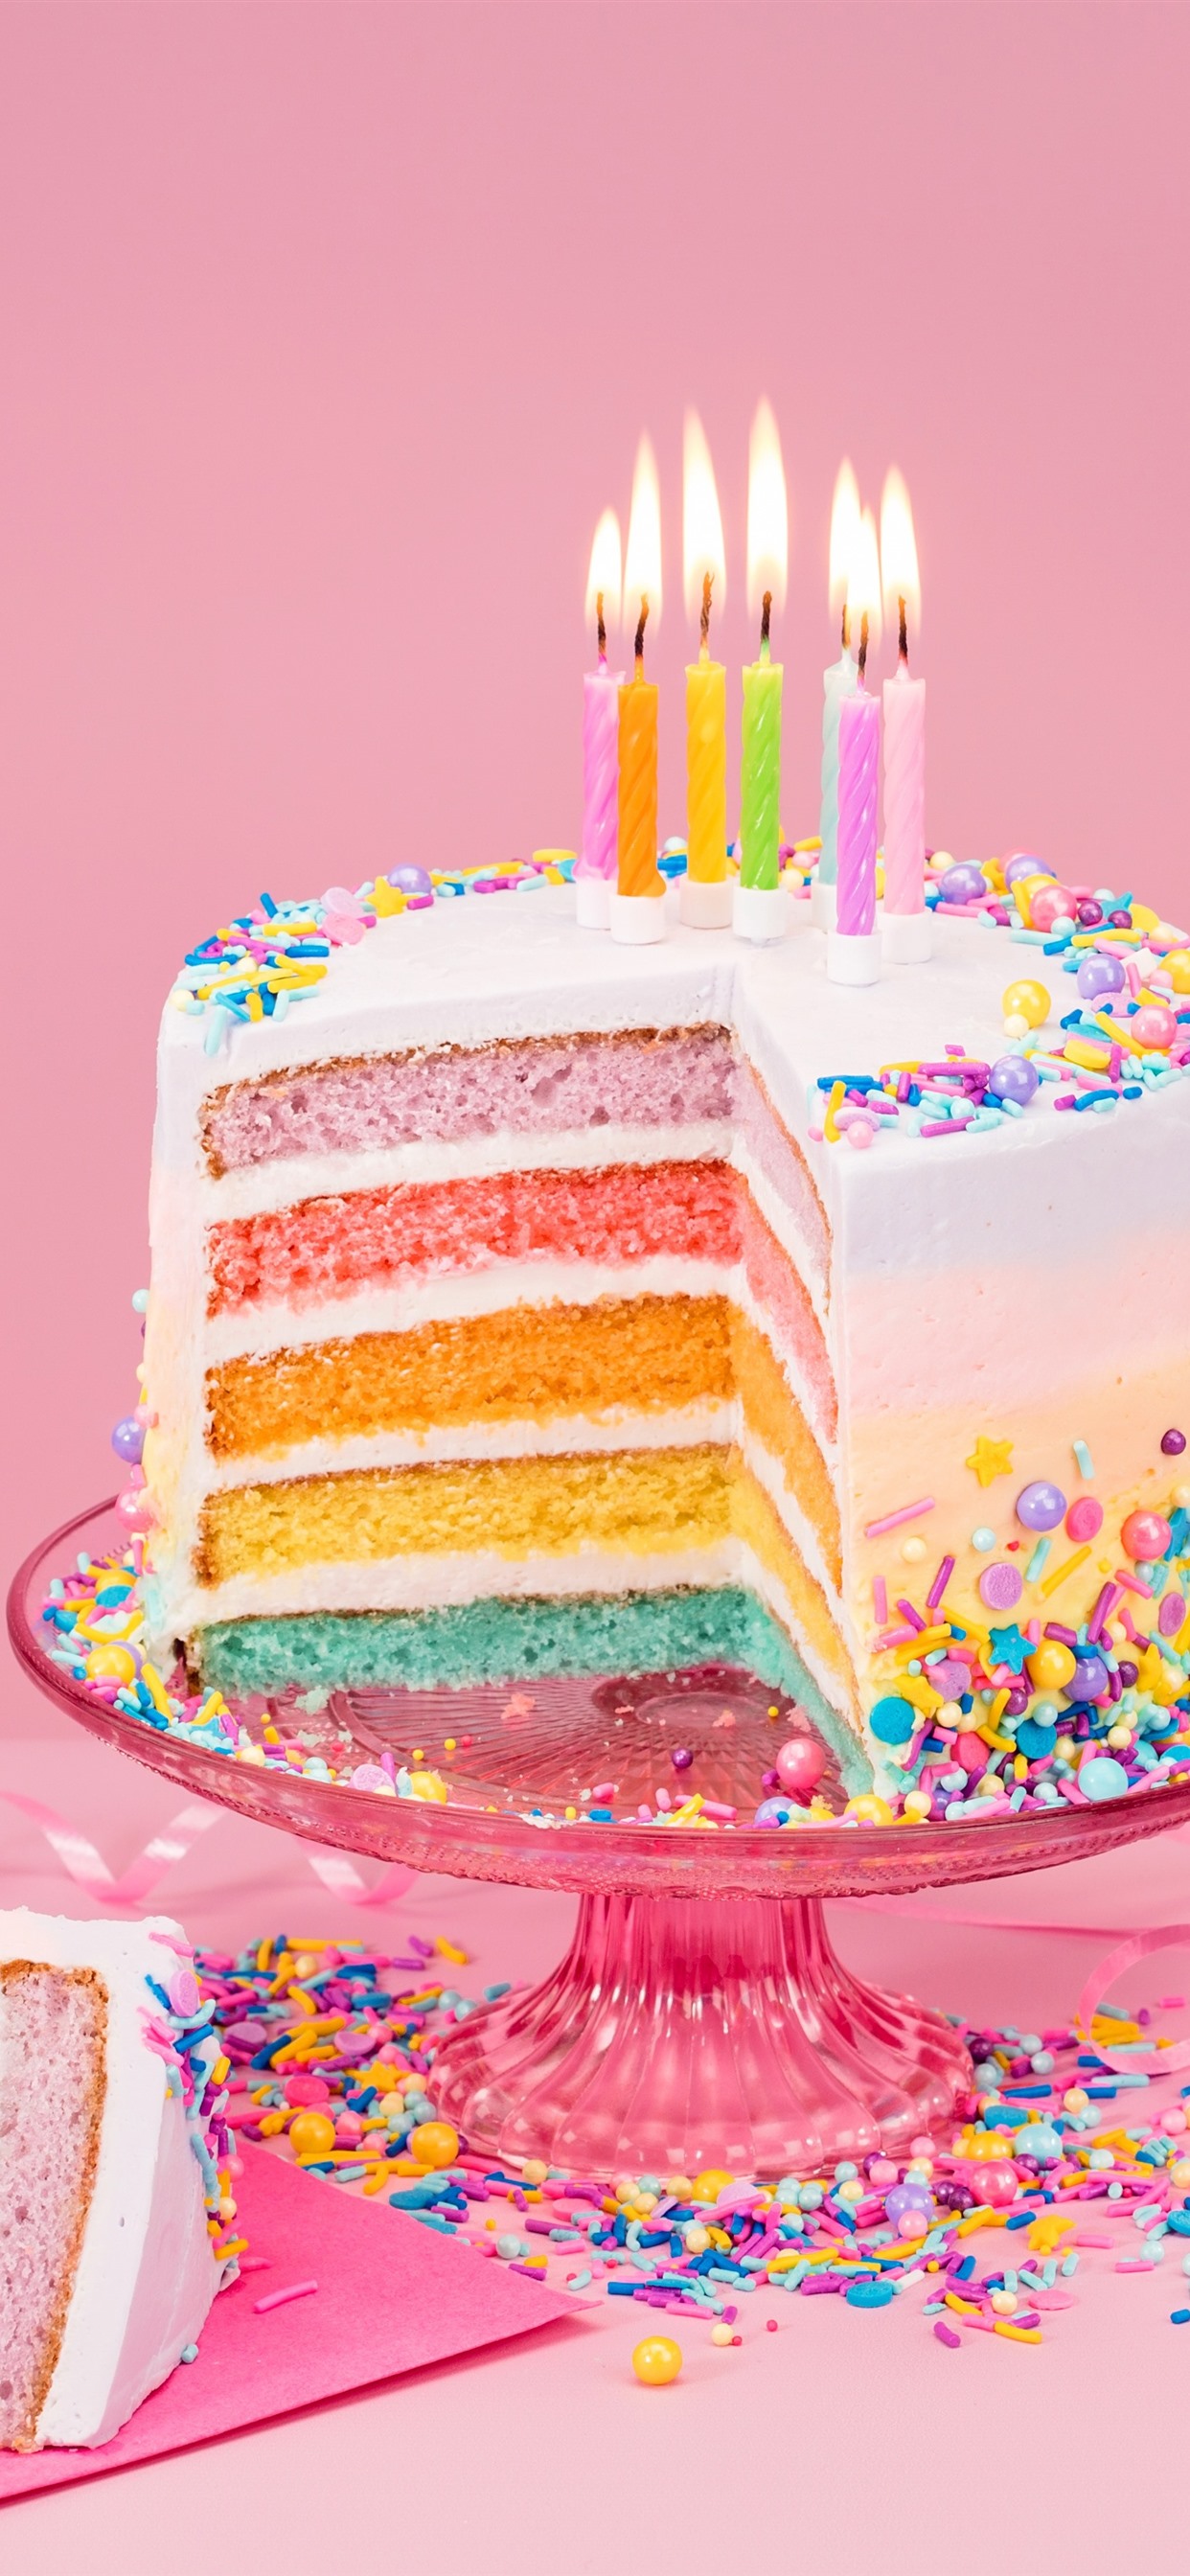 Belated Happy Birthday Wishes Cake - HD Wallpaper 